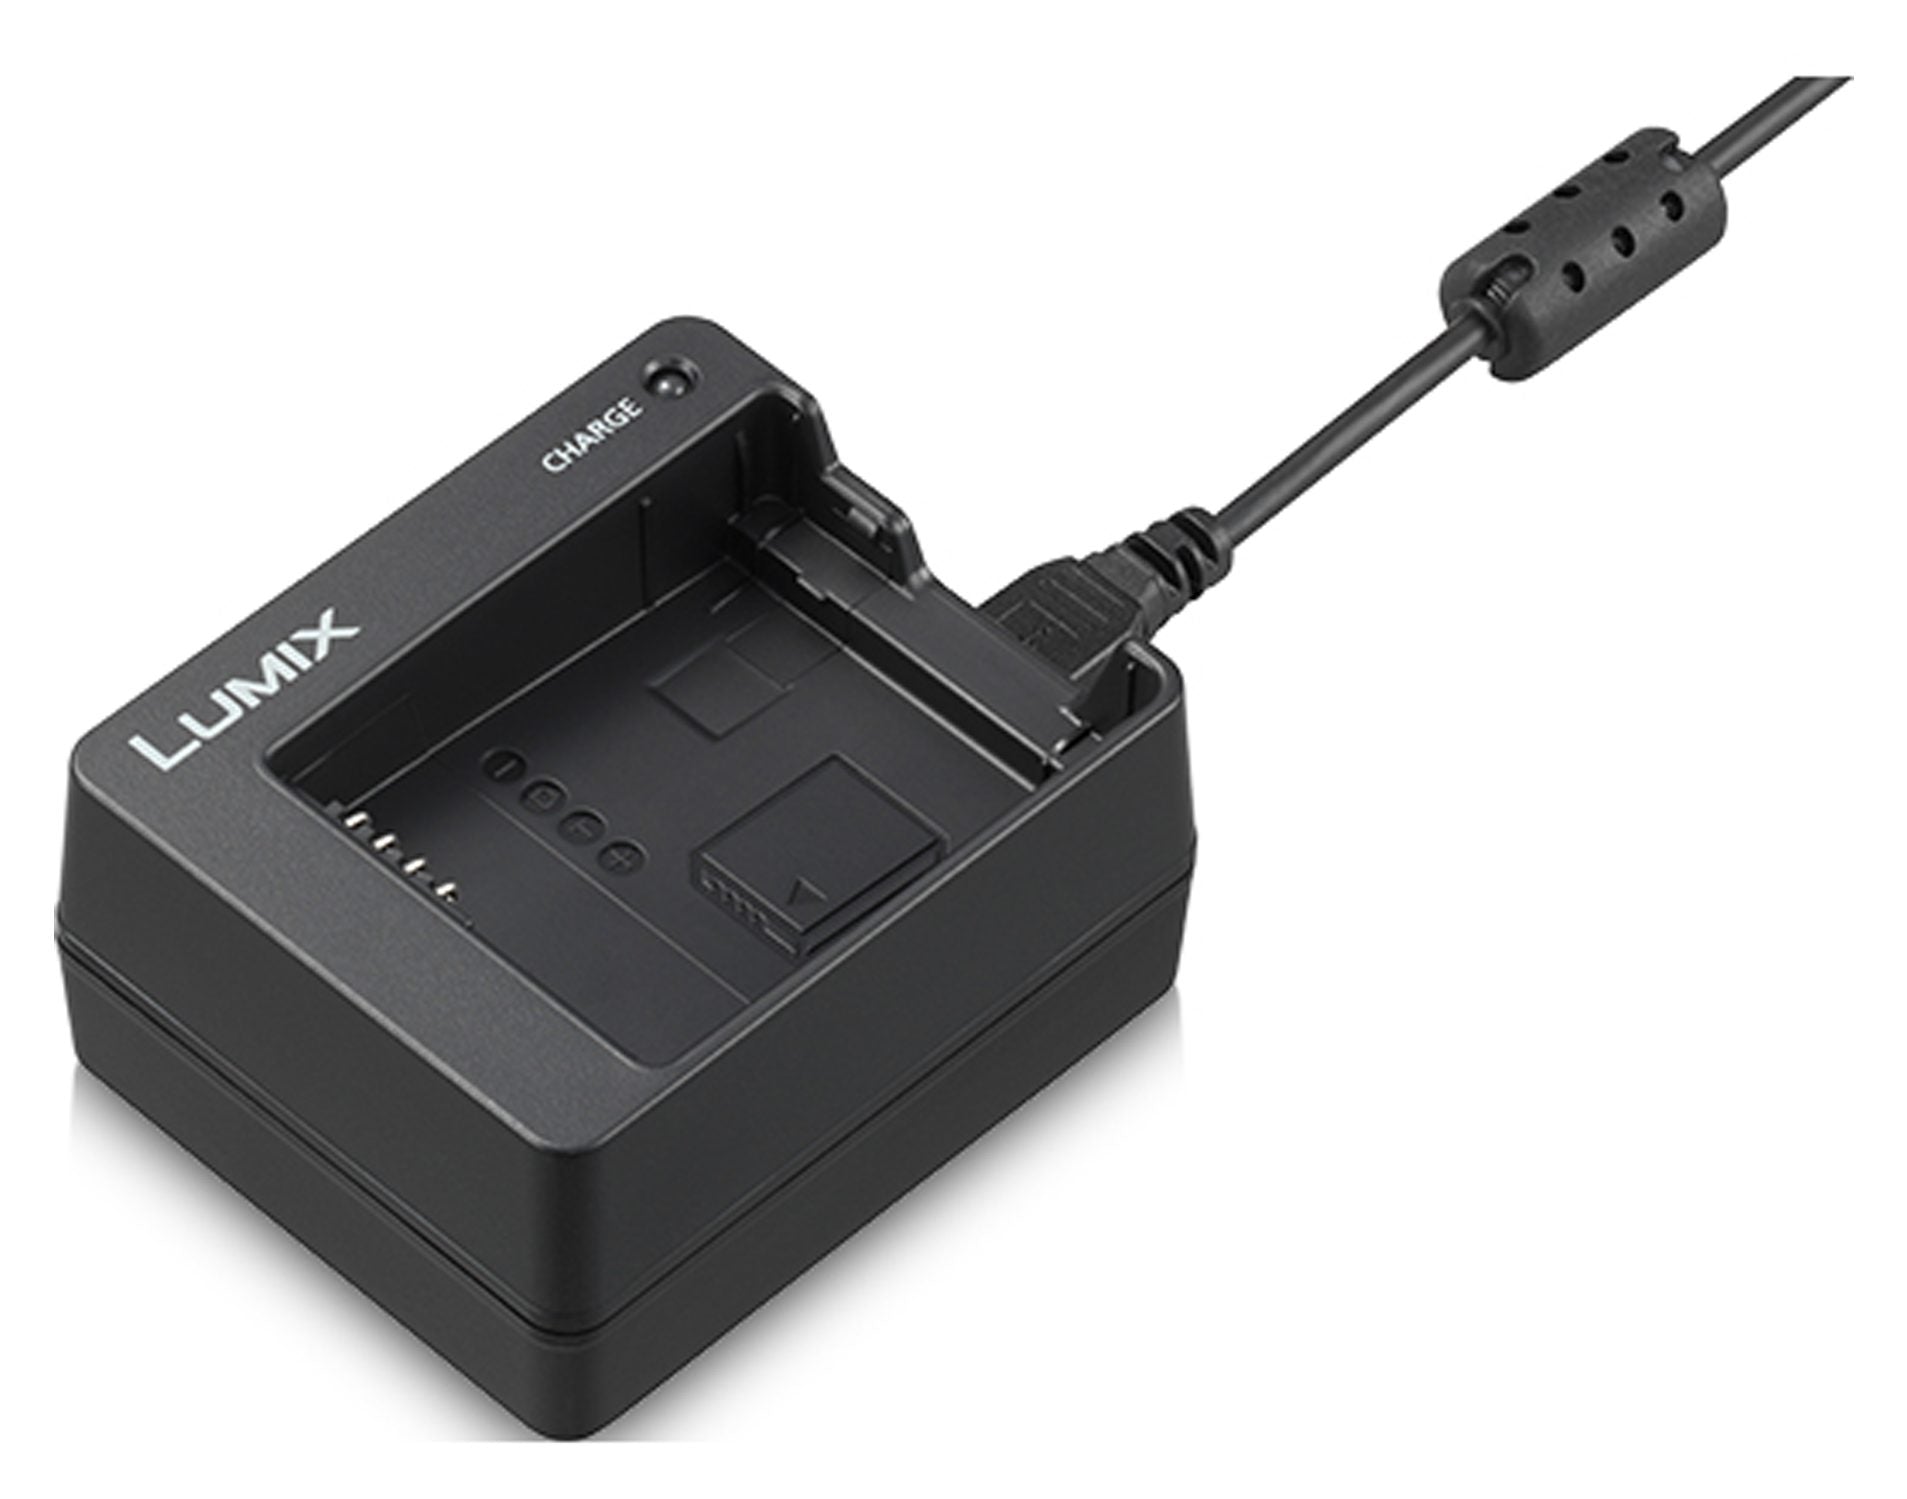 Panasonic DMW-BTC12E Battery charger for BLC12-BLG10-BLH7 batteries